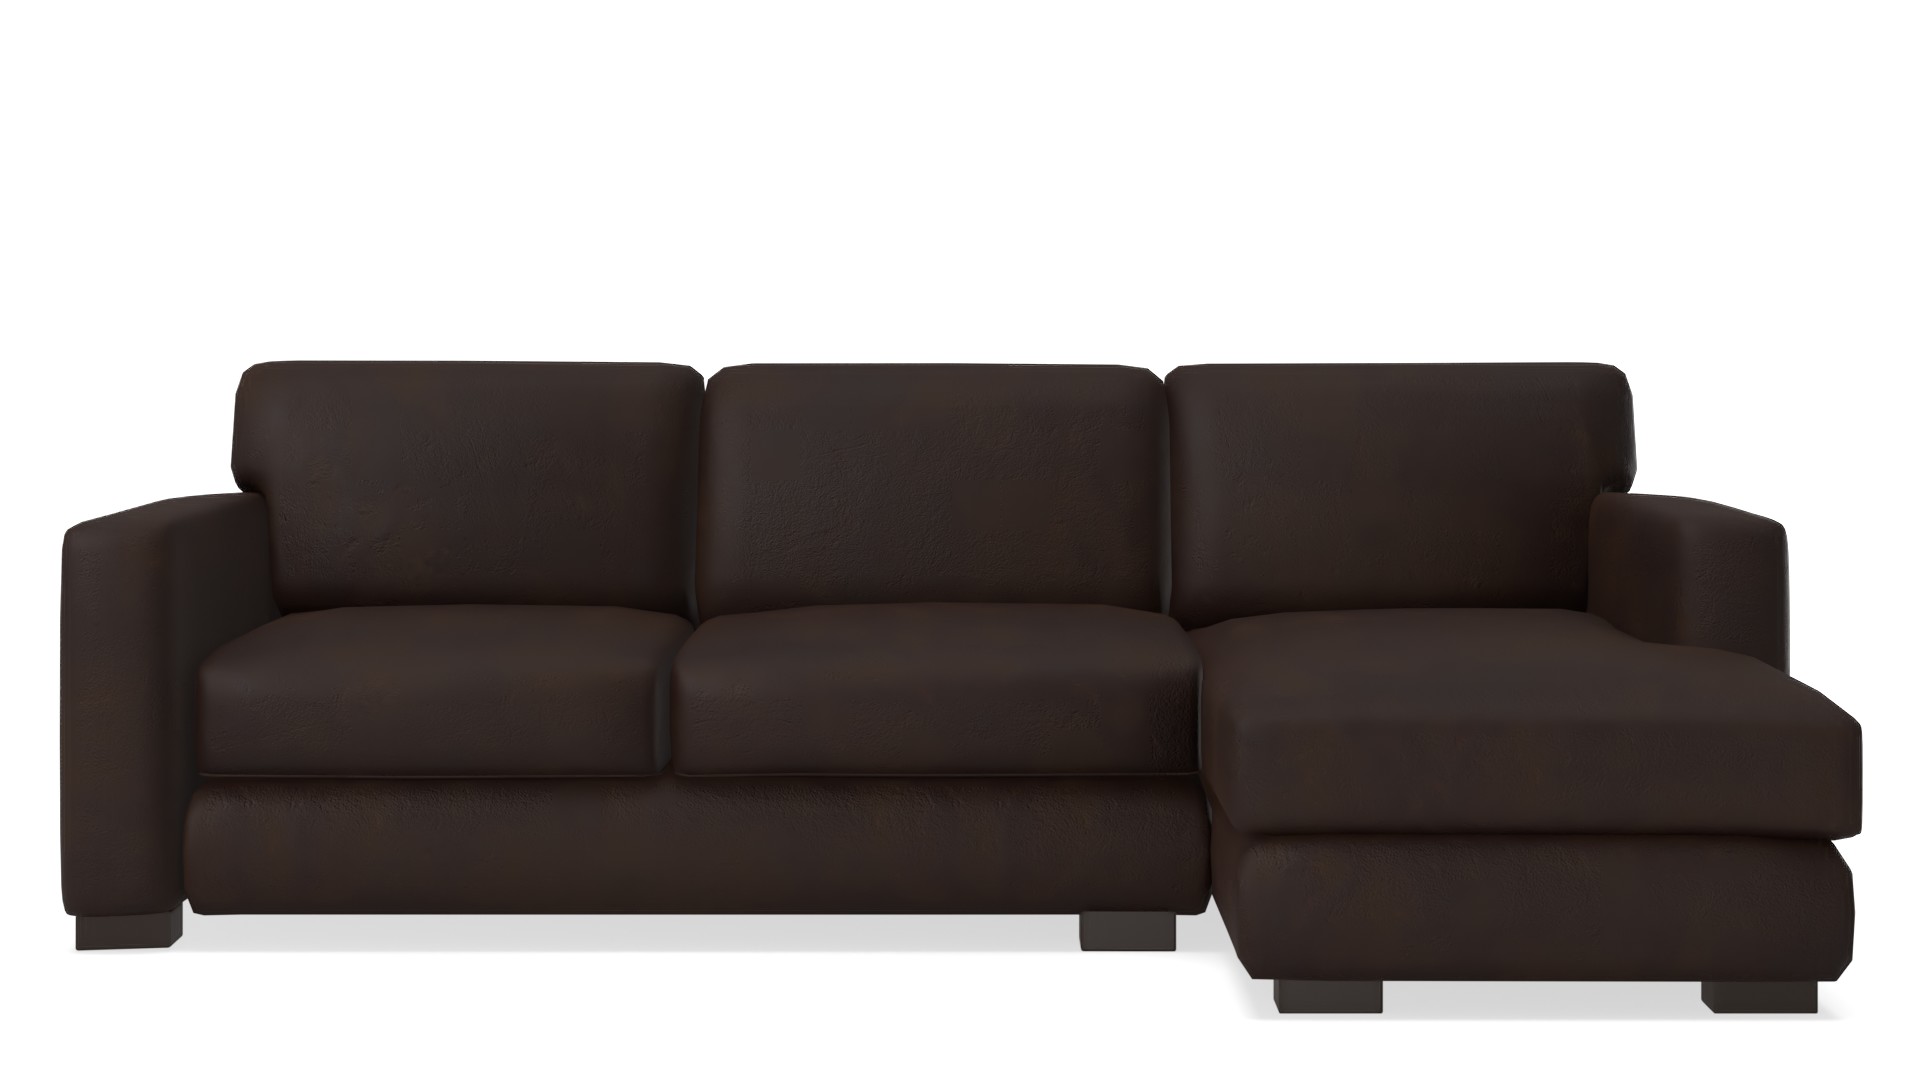 turner square arm leather grand sofa 103.5